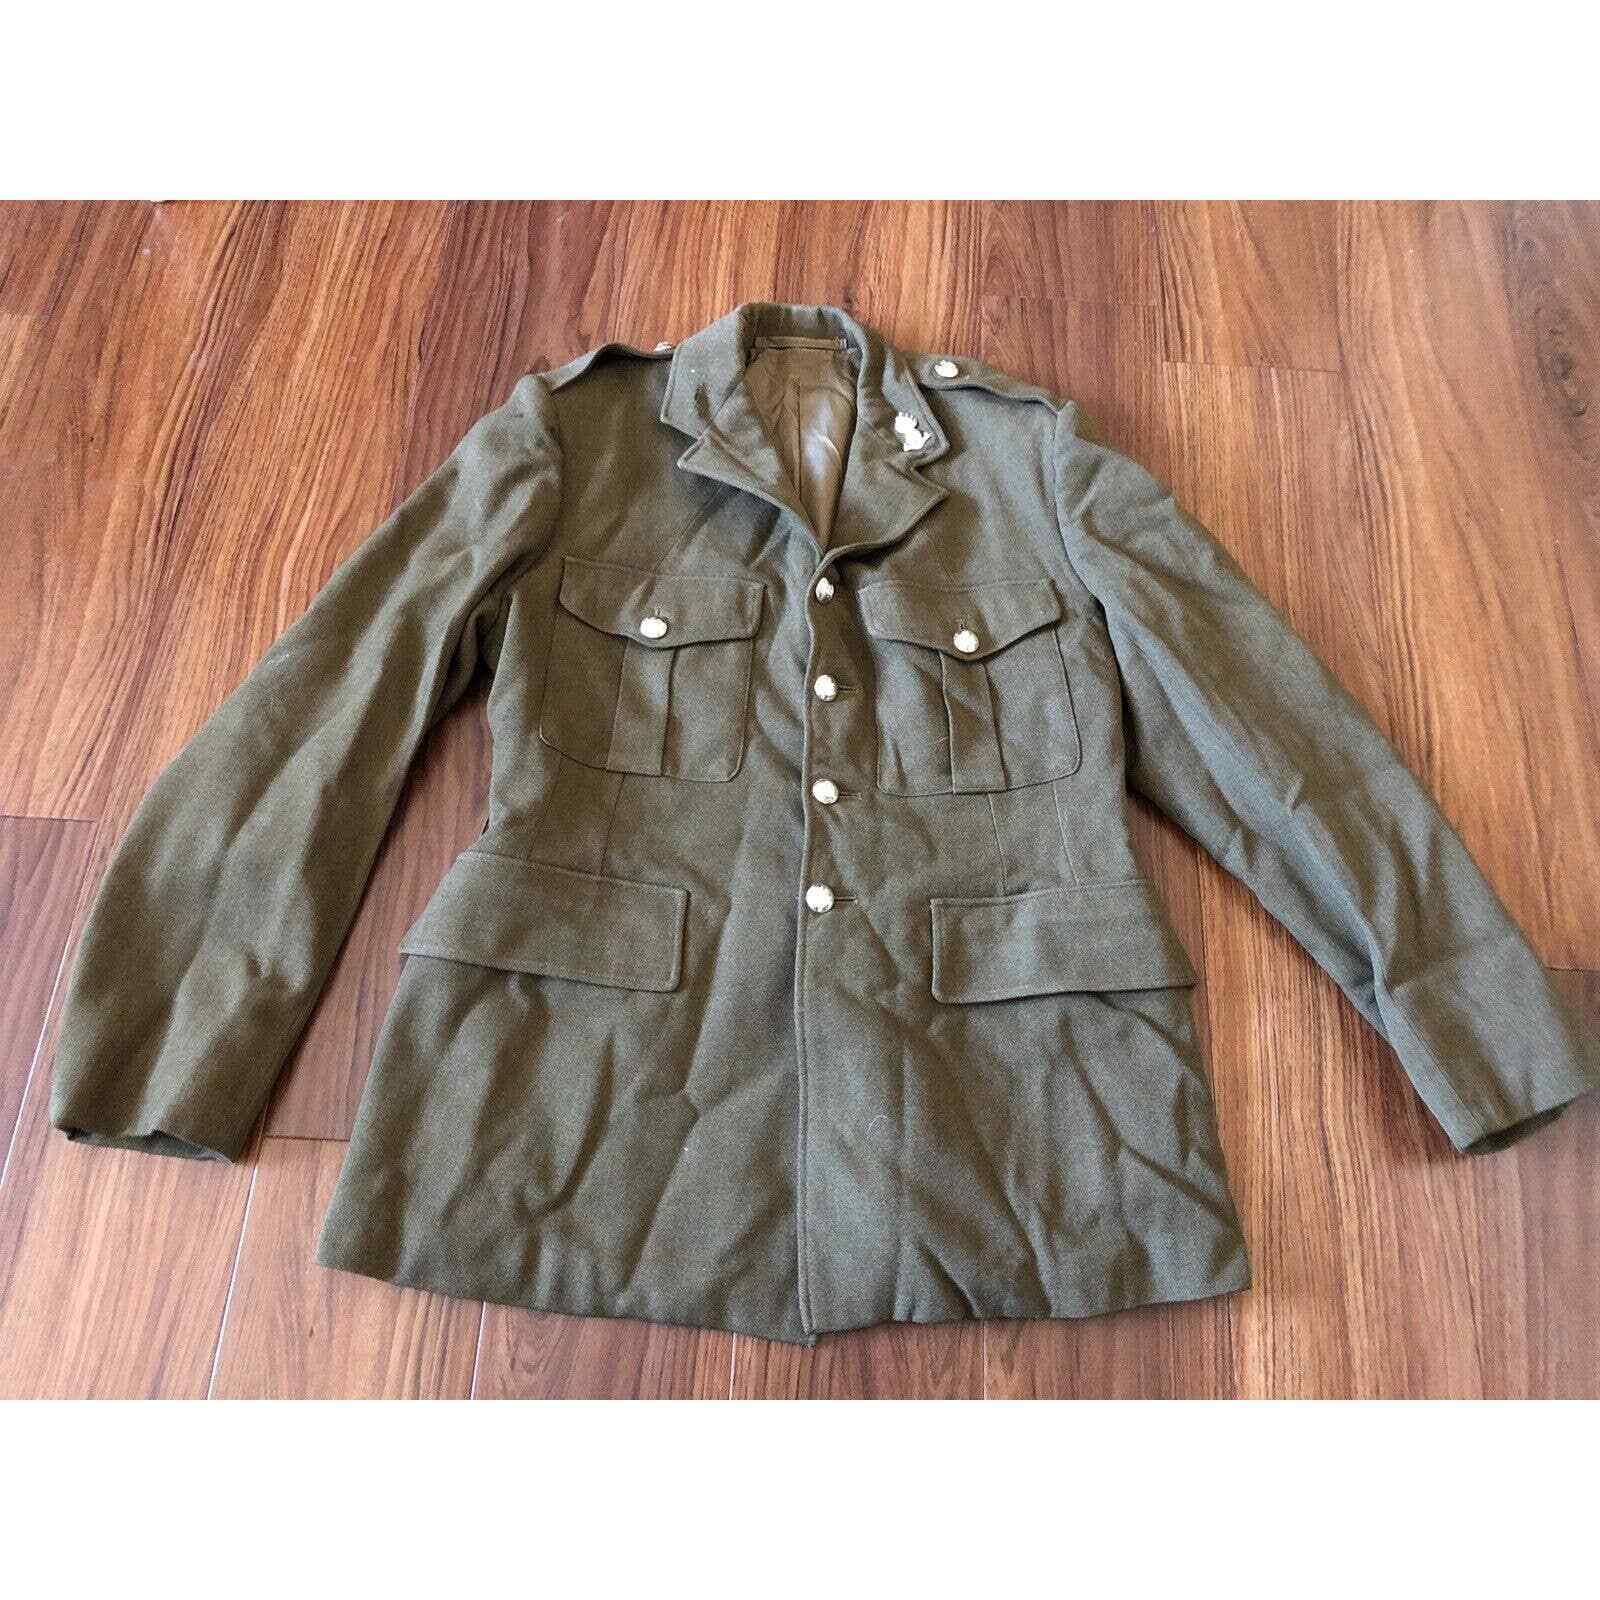 Vintage 1966 British Army No 2 Dress Jacket. H. Lottery & Co Ltd Size 27 VTG